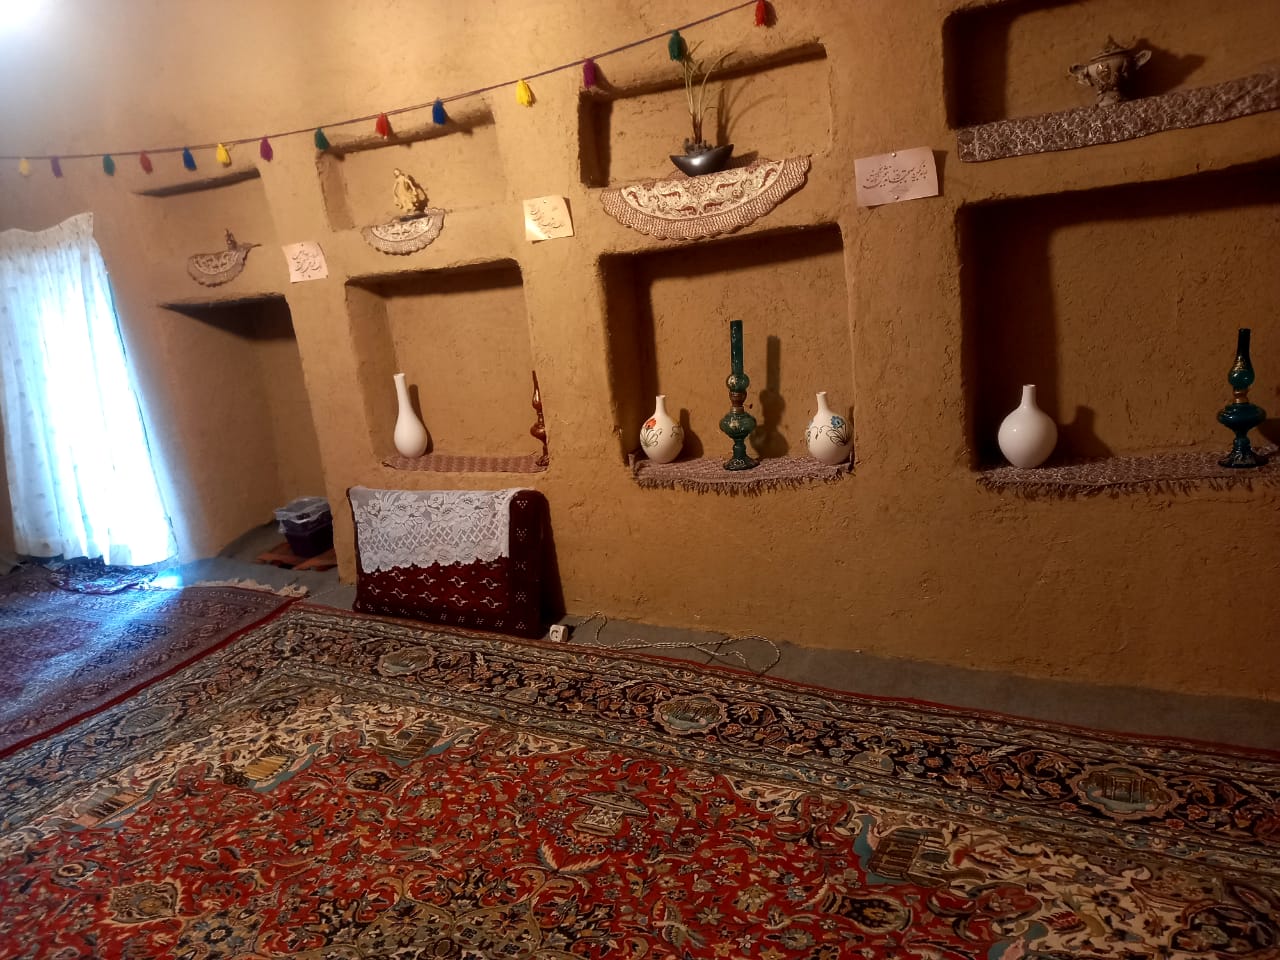 Village اجاره اتاق سنتی در روستا امزادجرد همدان - اتاق 3